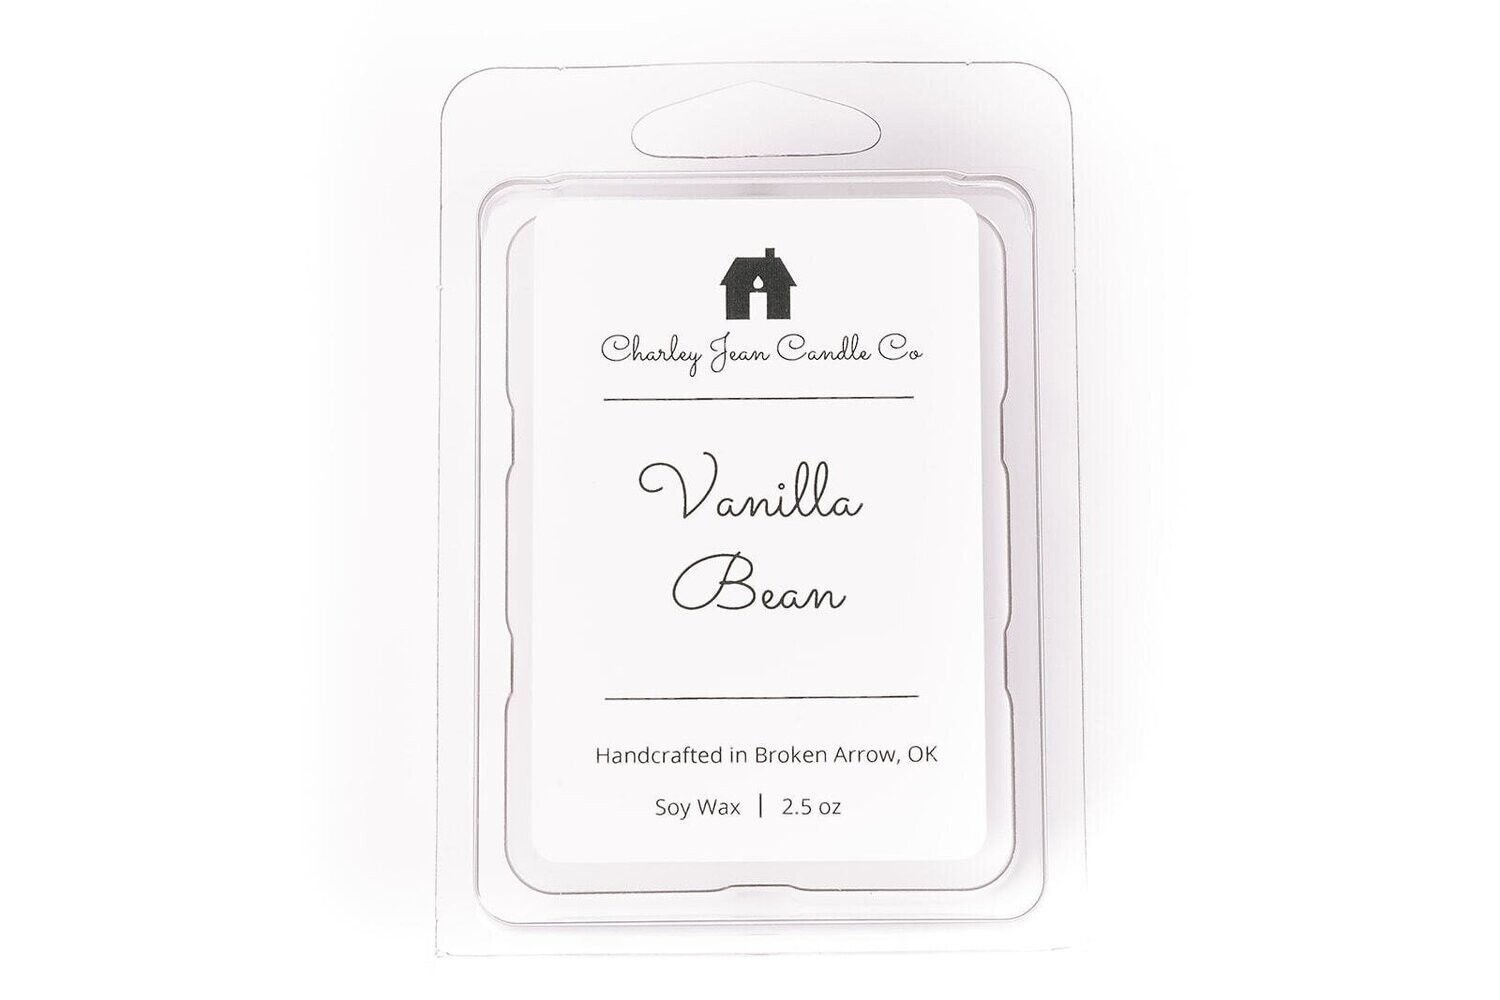 Candleflare Vanilla Bean Soy Wax Melts - Handmade by Candleflare